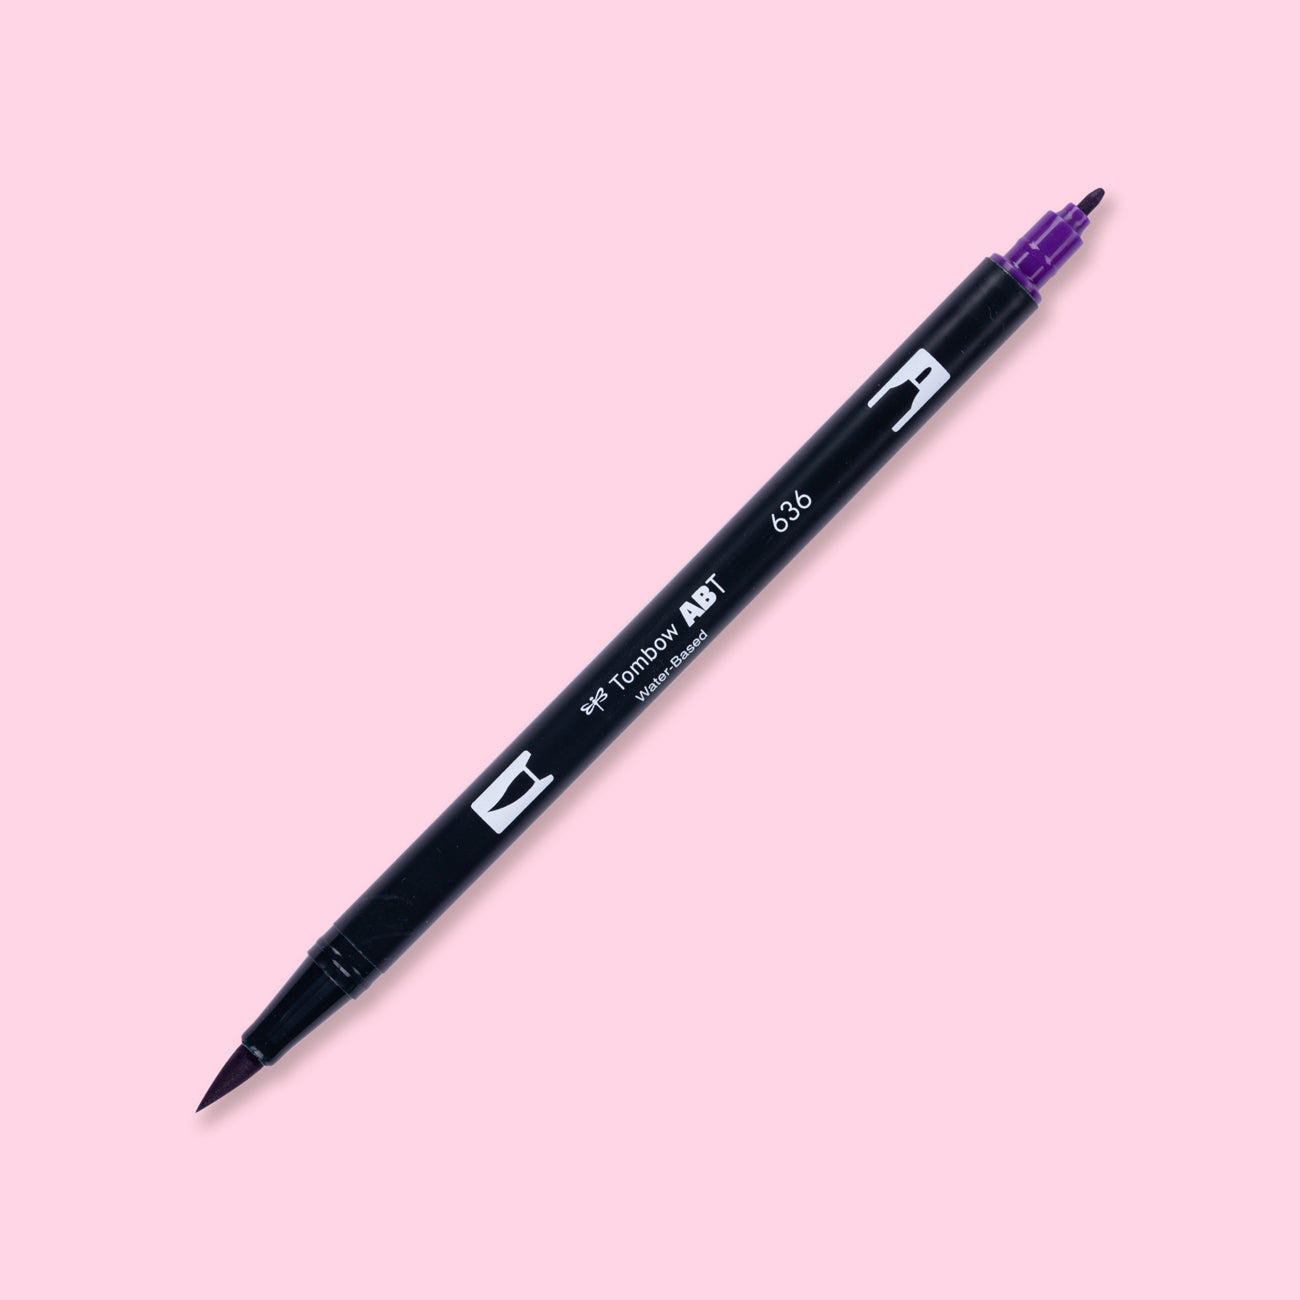 Tombow Dual Brush Pen - 636 - Imperial Purple